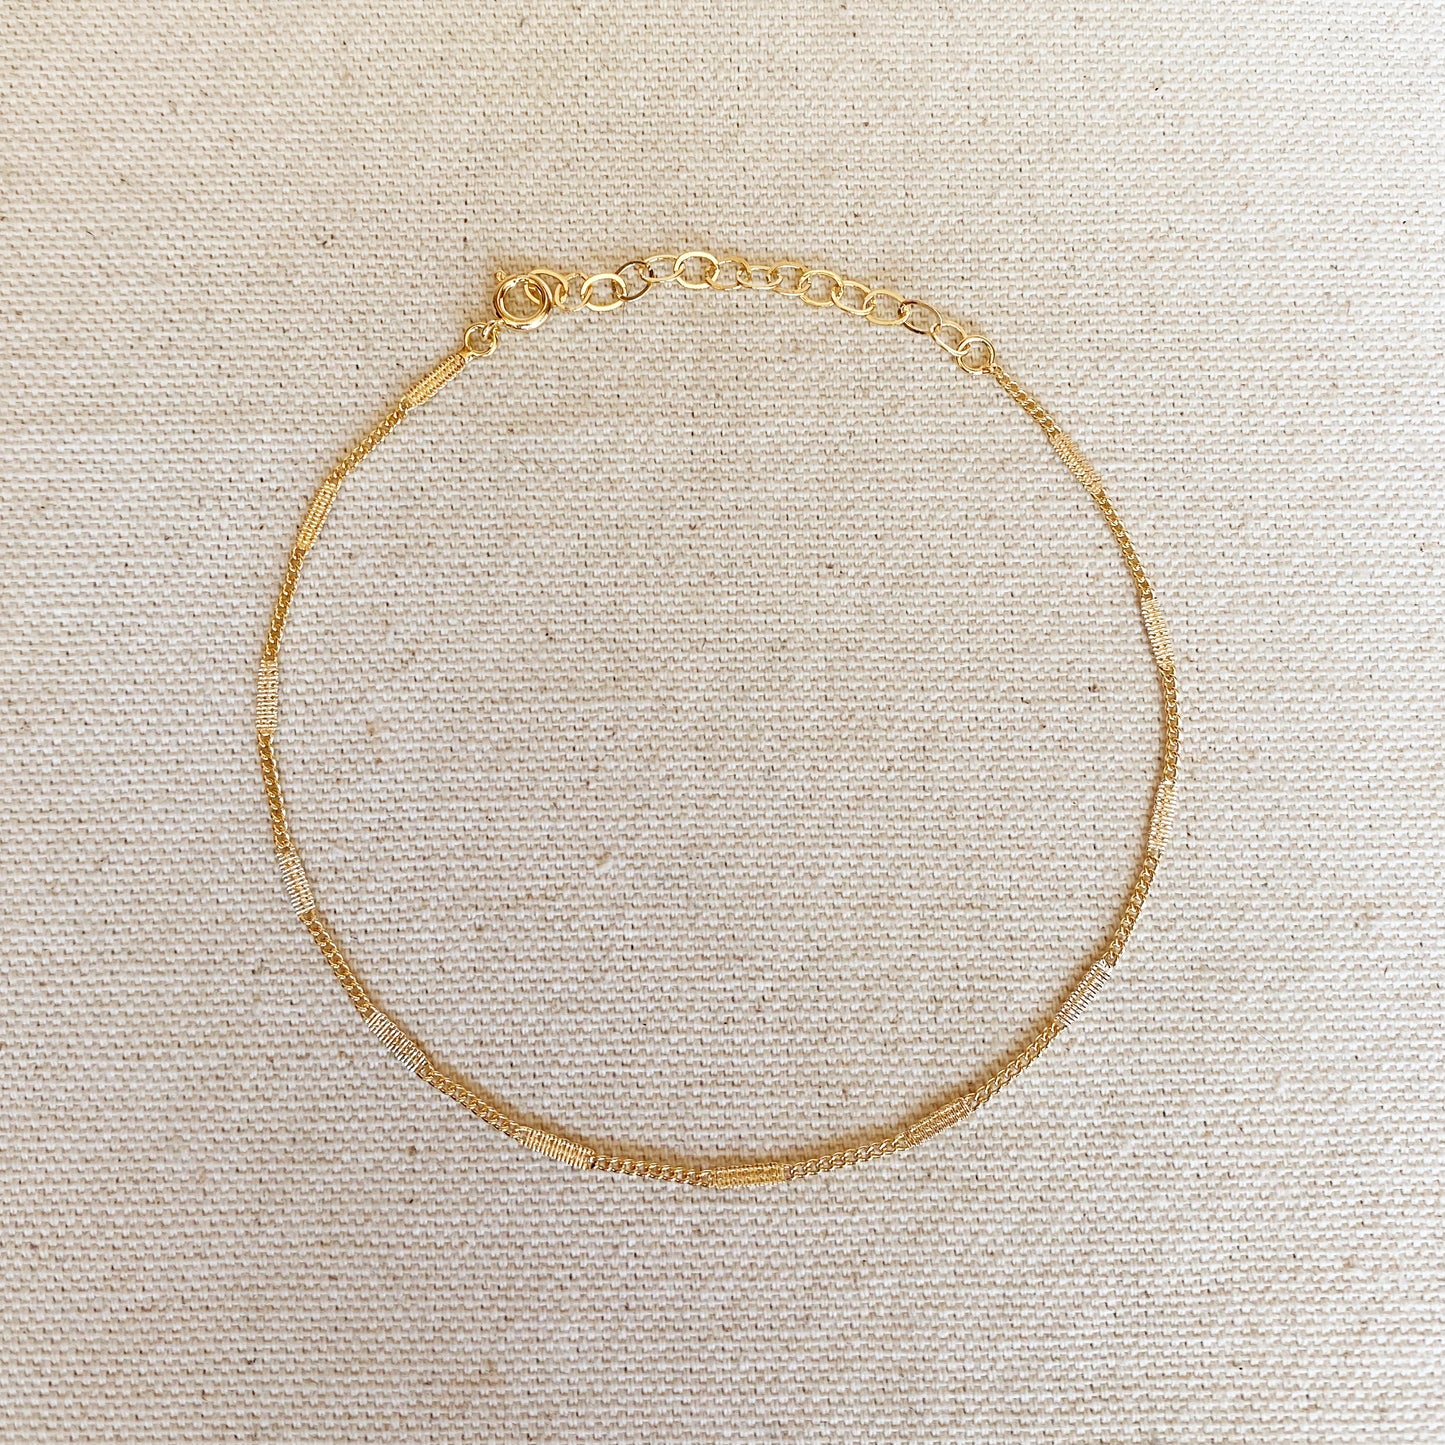 GoldFi 18k Gold Filled Pressed Detail Chain Anklet